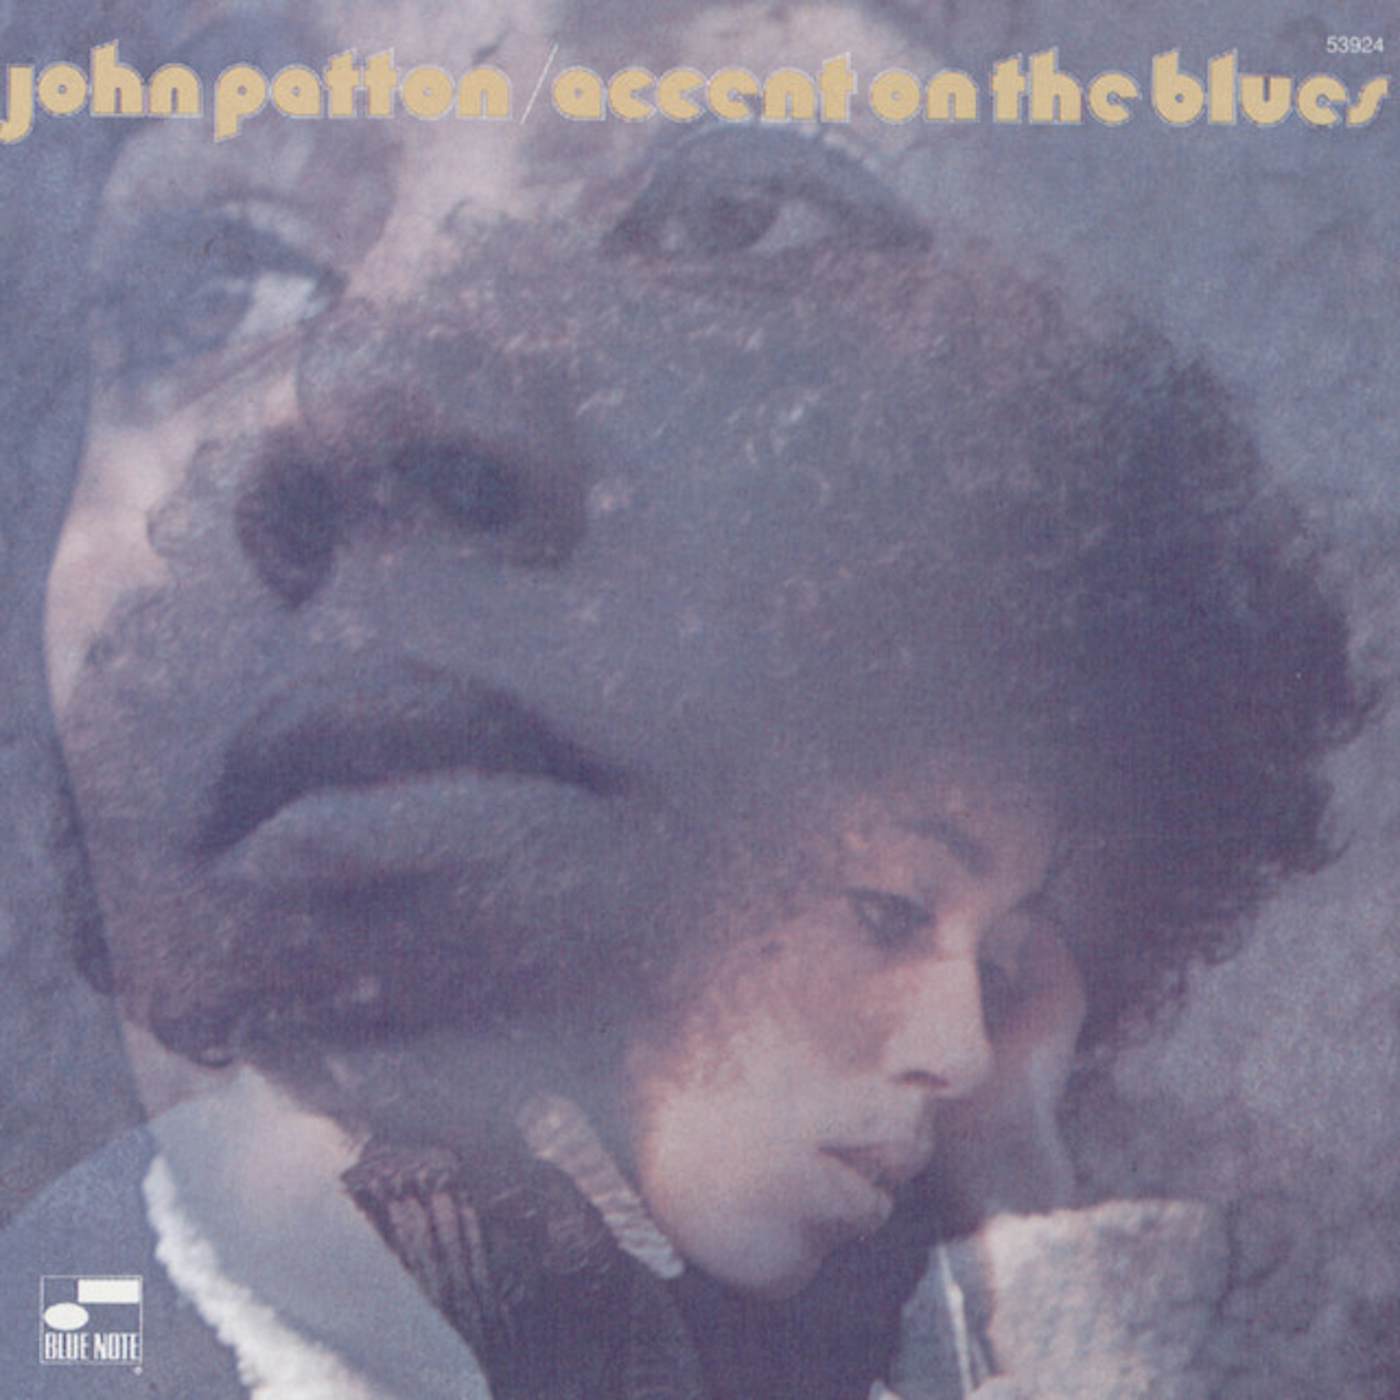 Big John Patton ACCENT ON THE BLUES CD